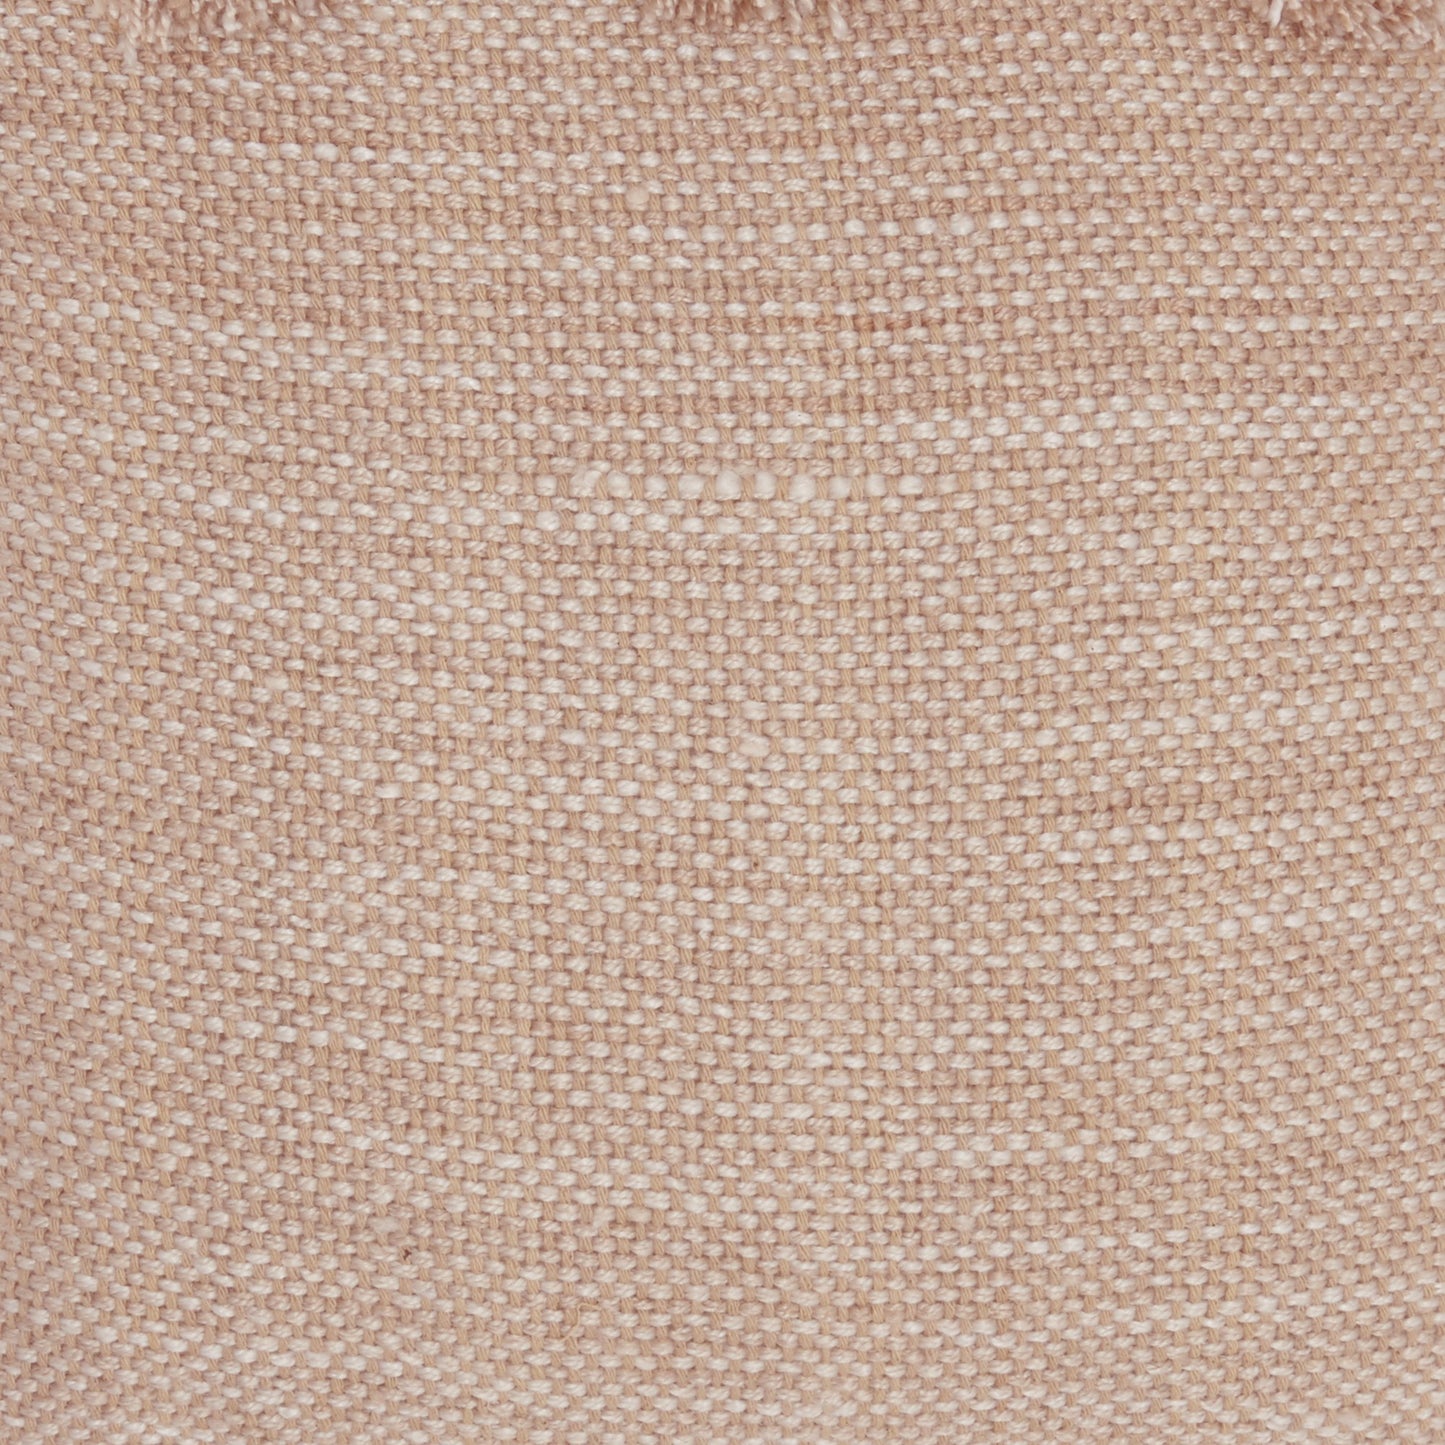 Rose Pink Tasseled Lumbar Pillow